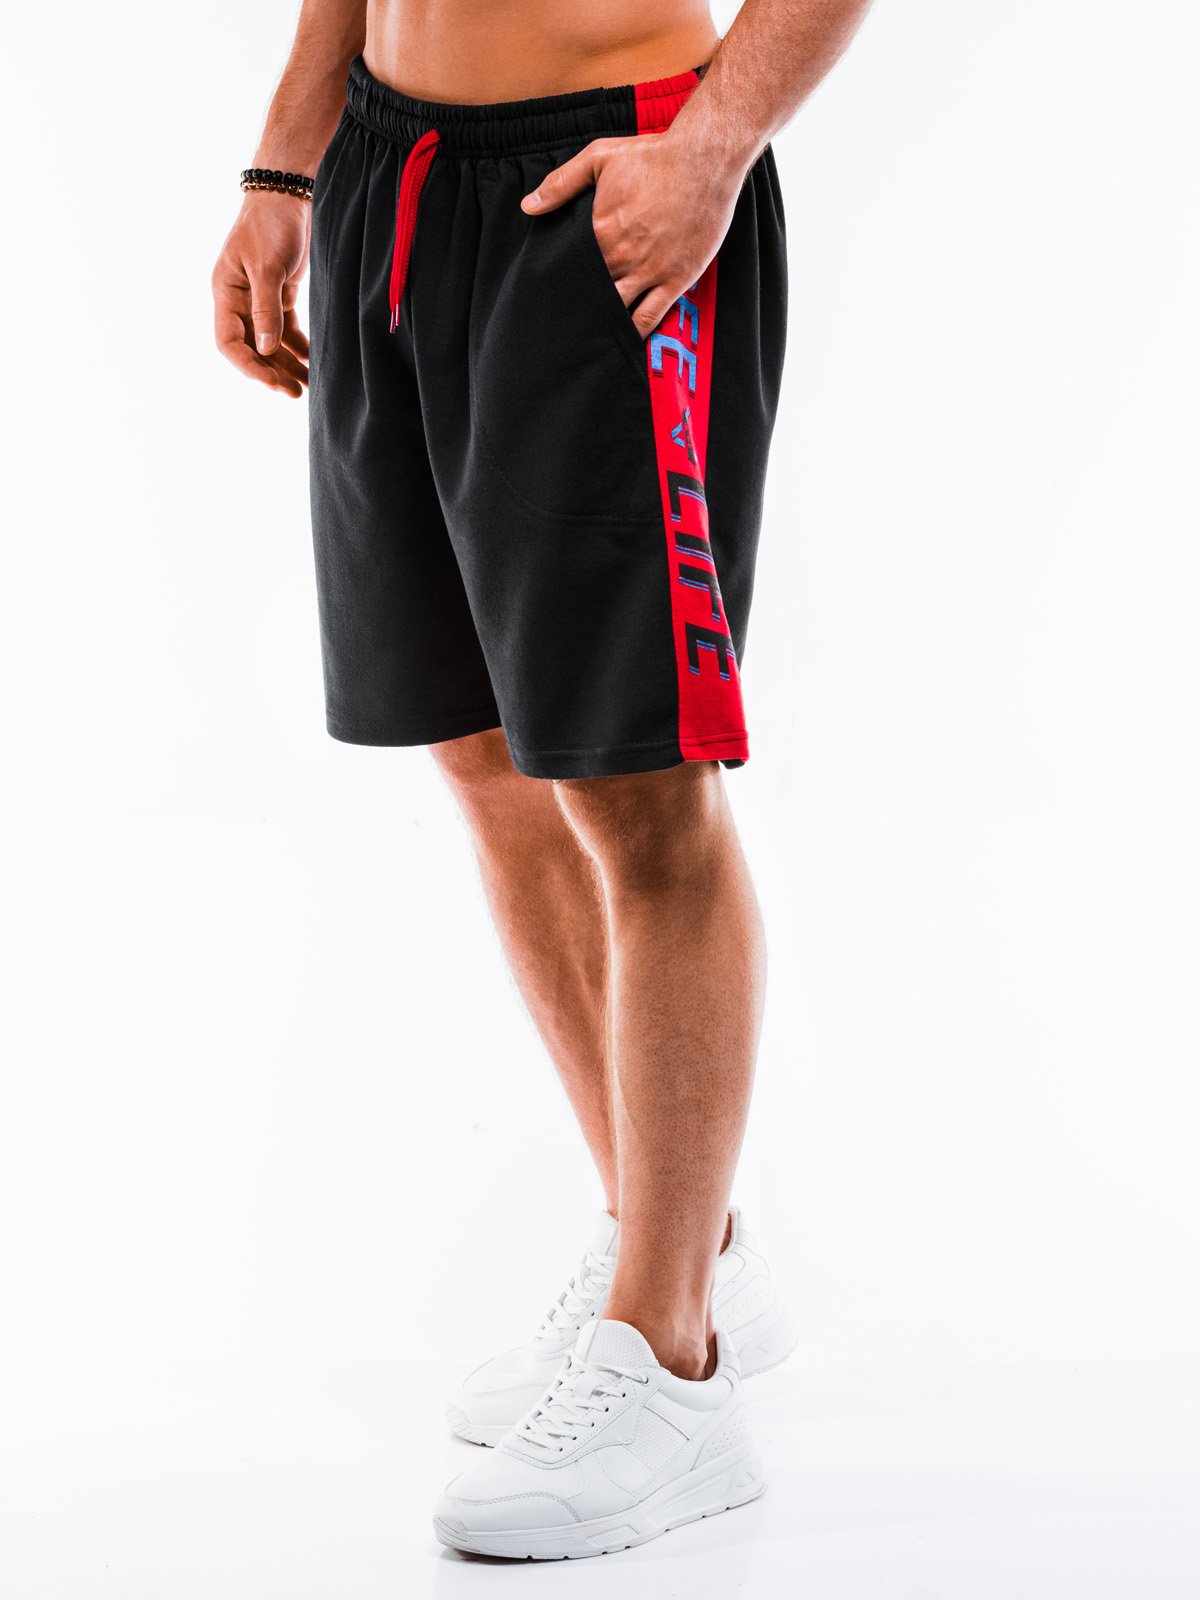 Men's short sweatpants W287 - khaki  MODONE wholesale - Clothing For Men